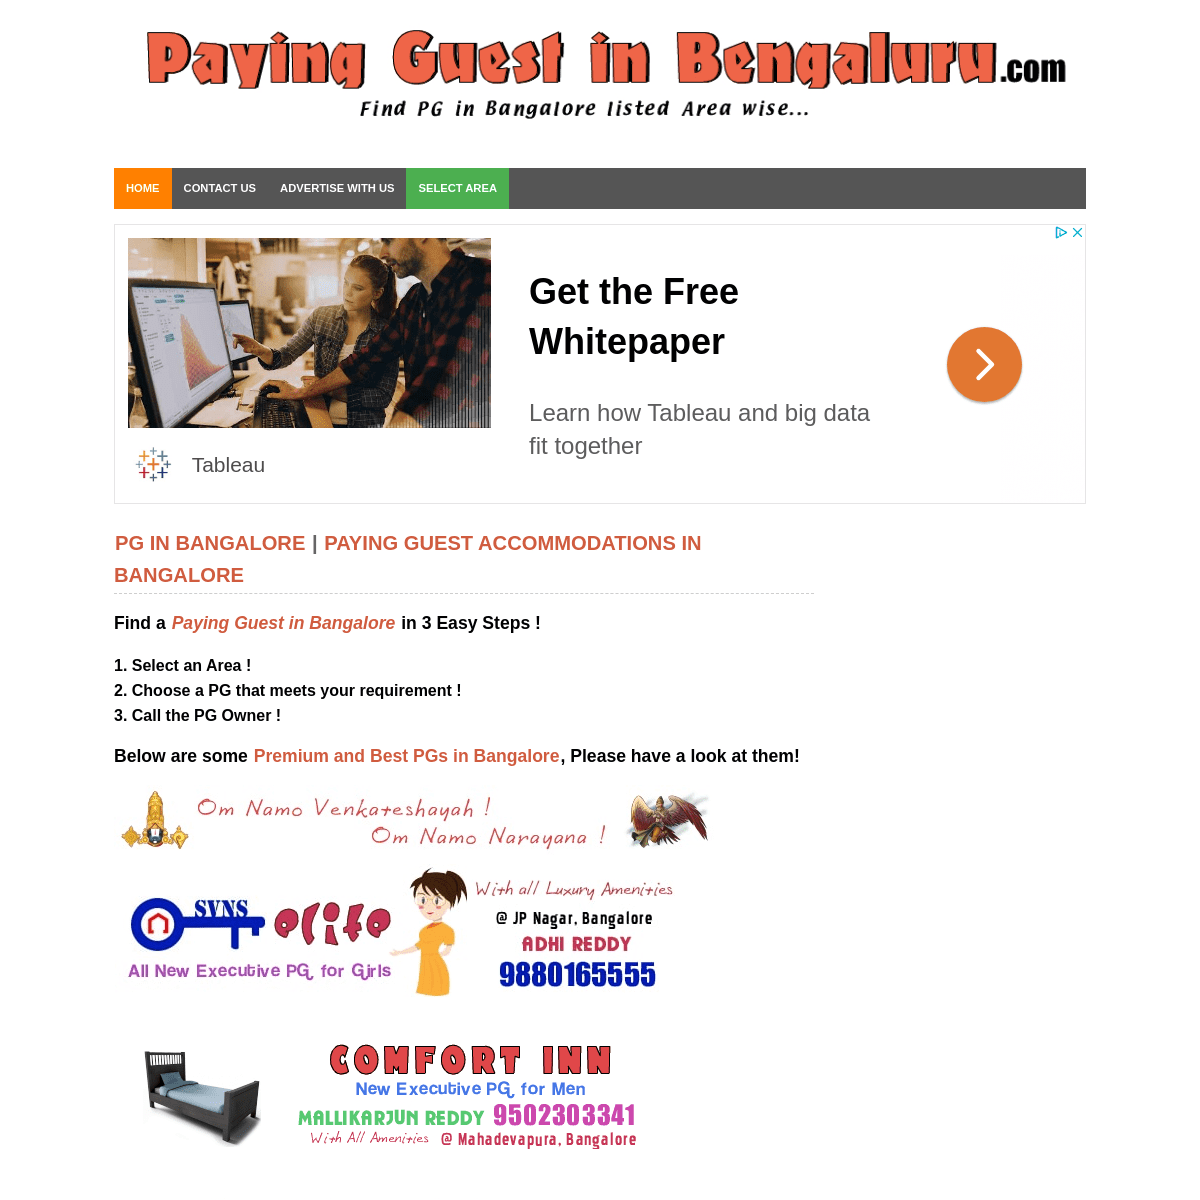 A complete backup of payingguestinbengaluru.com